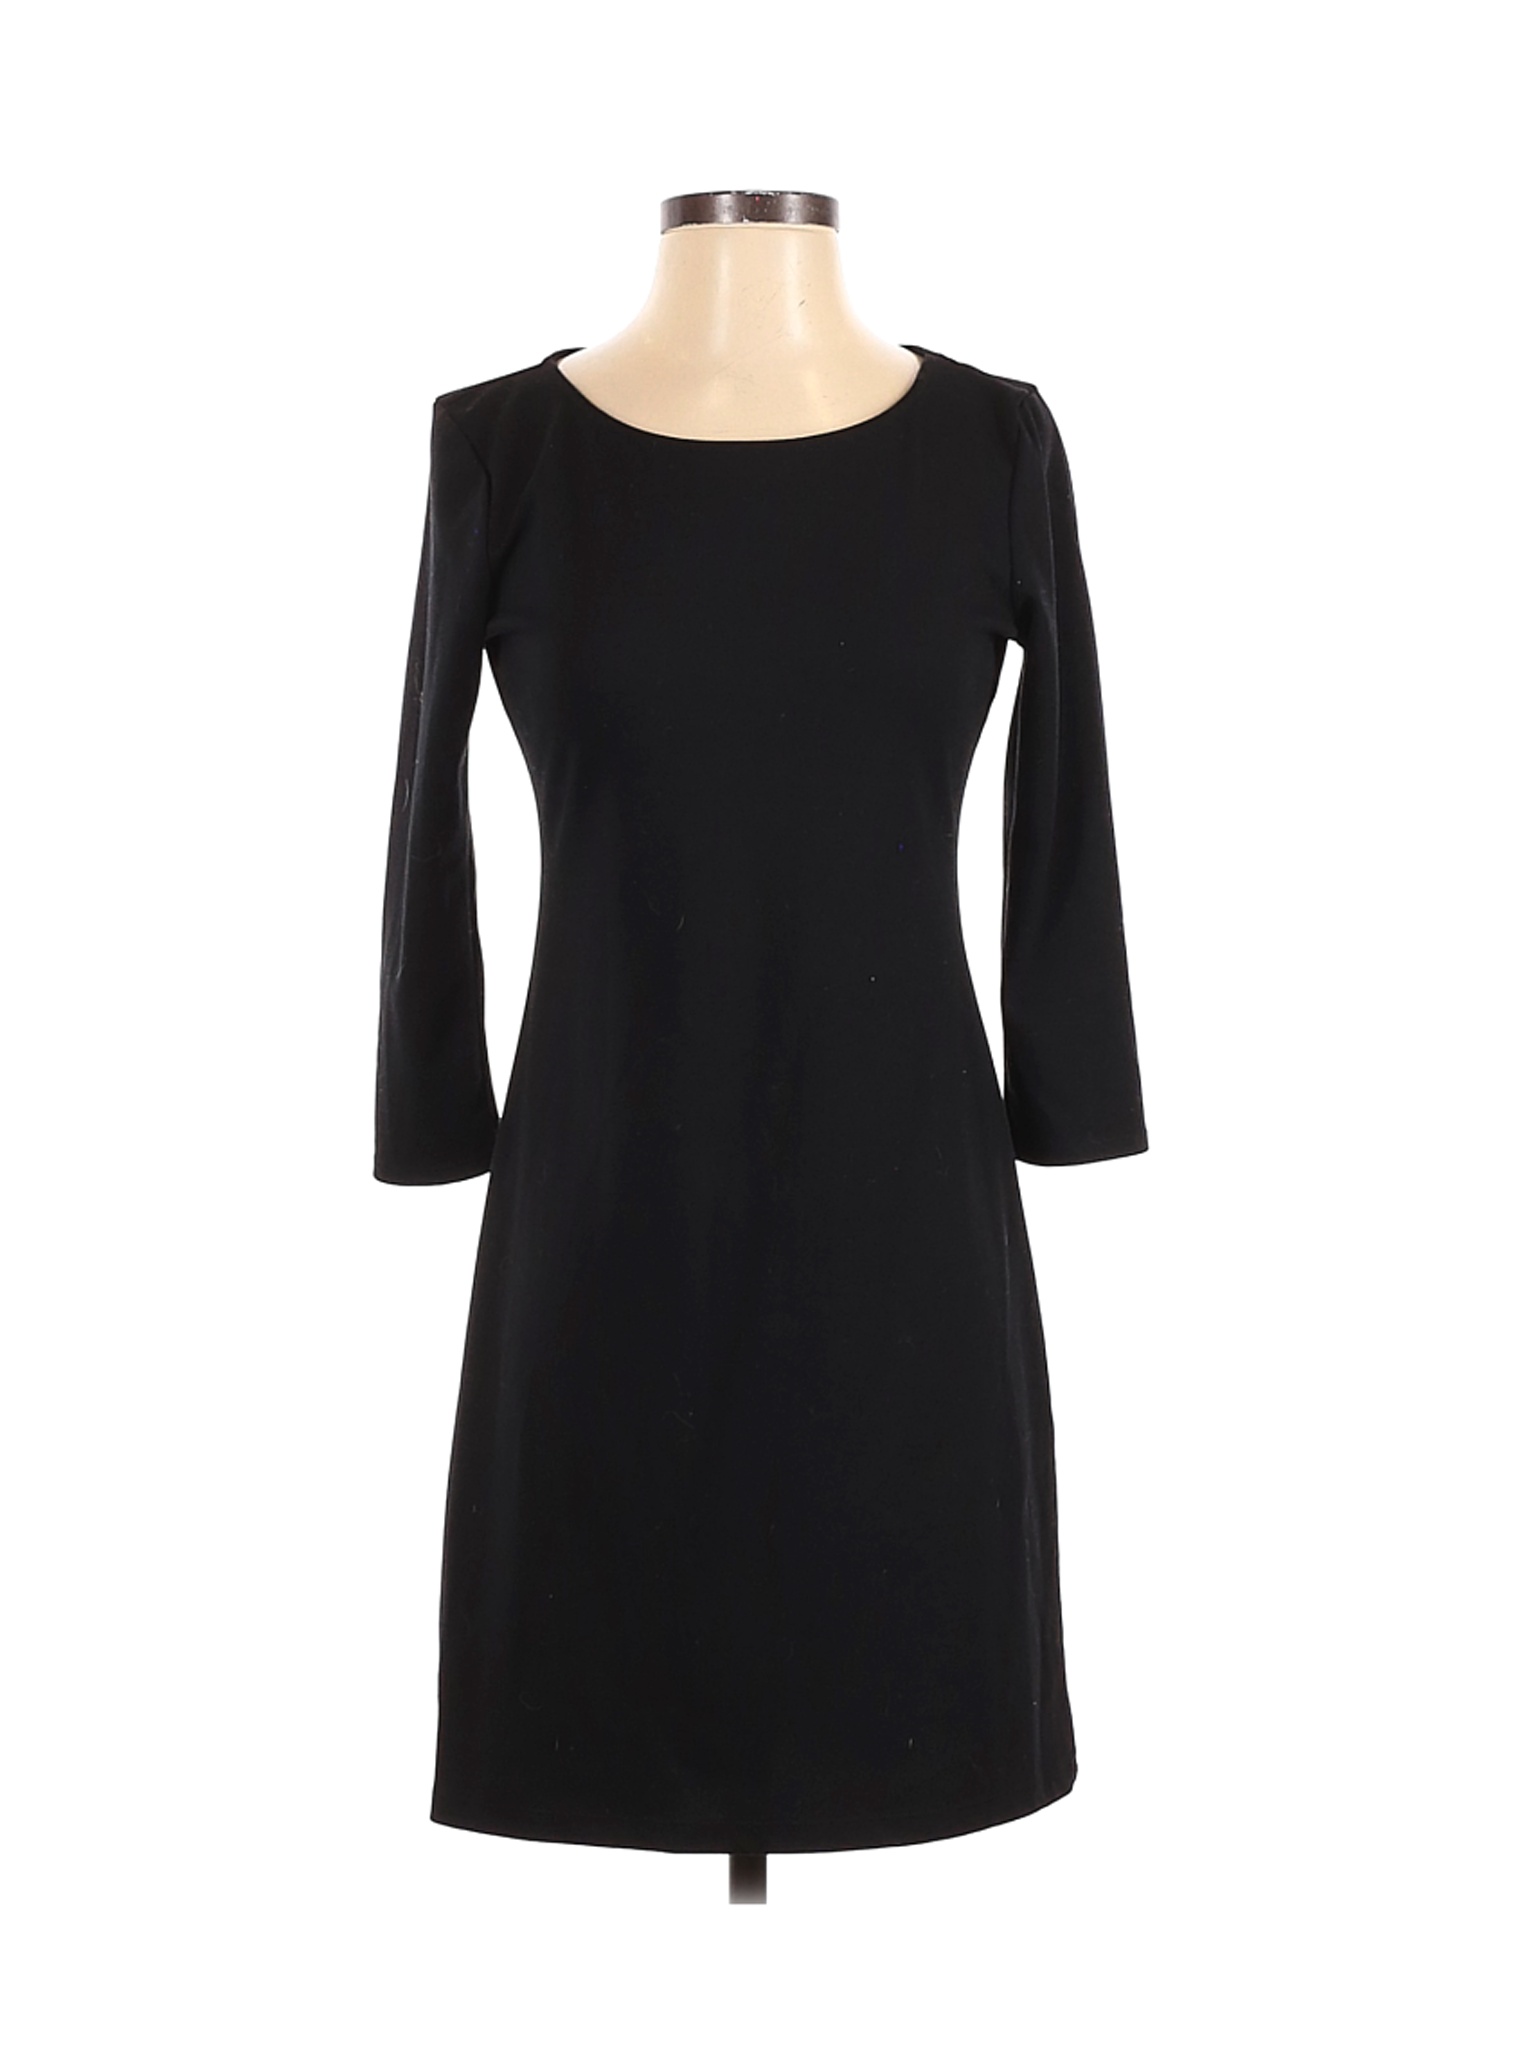 Old Navy Women Black Cocktail Dress XS | eBay